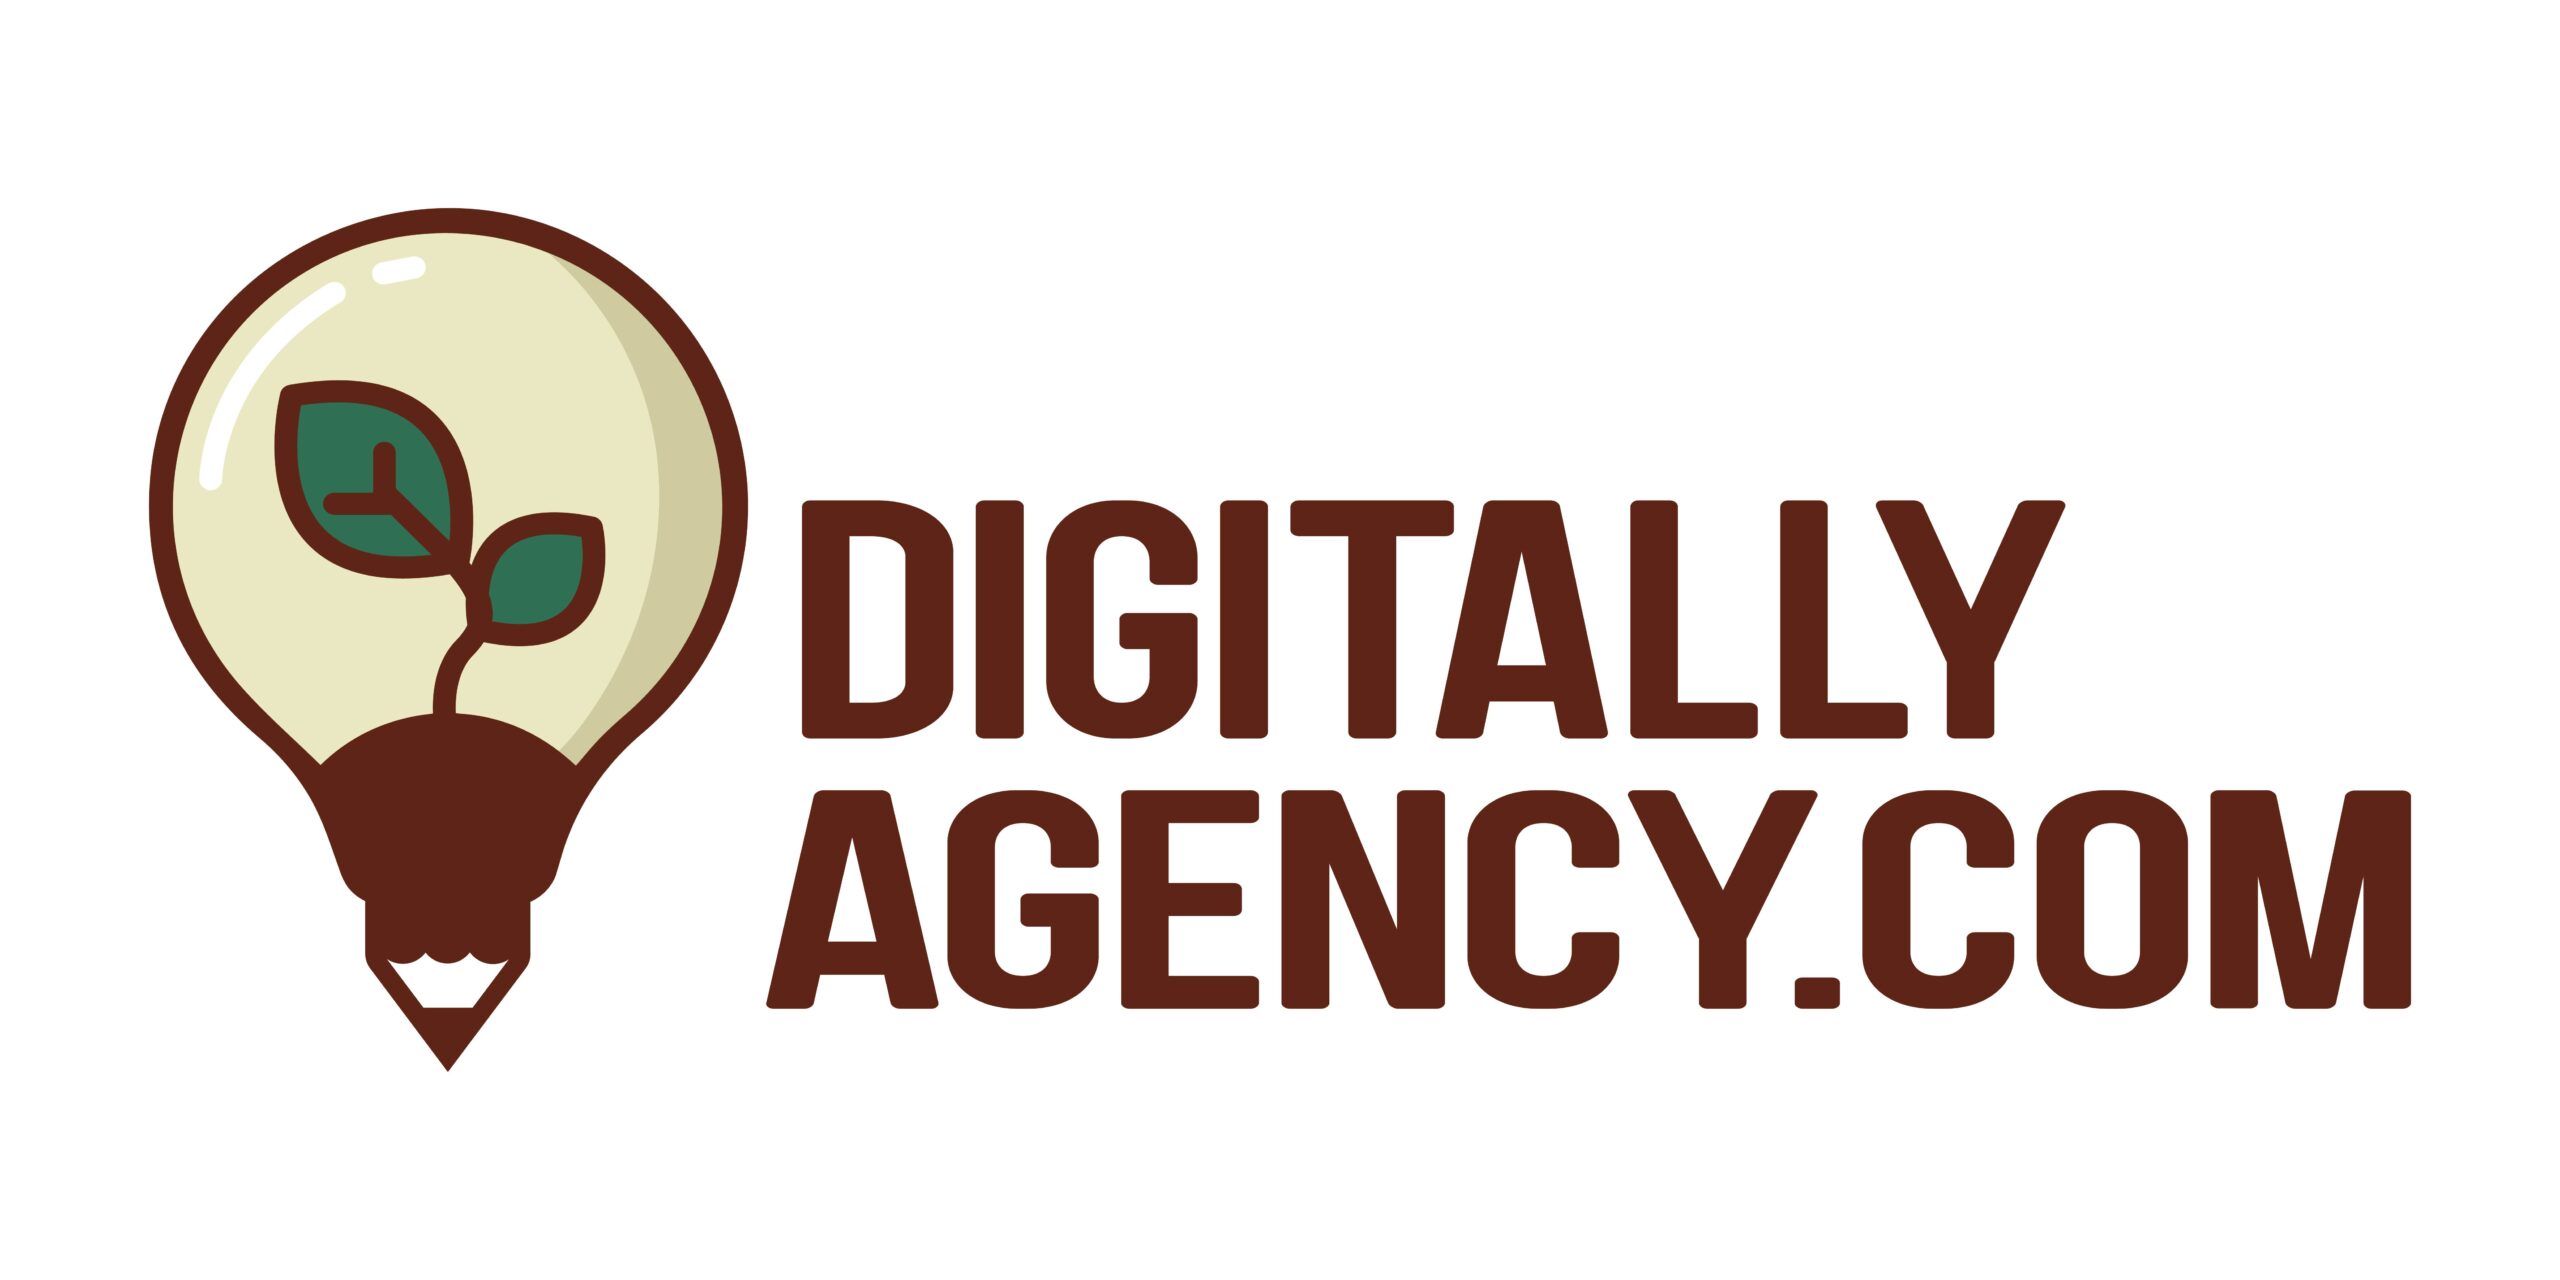 Digitally Agency